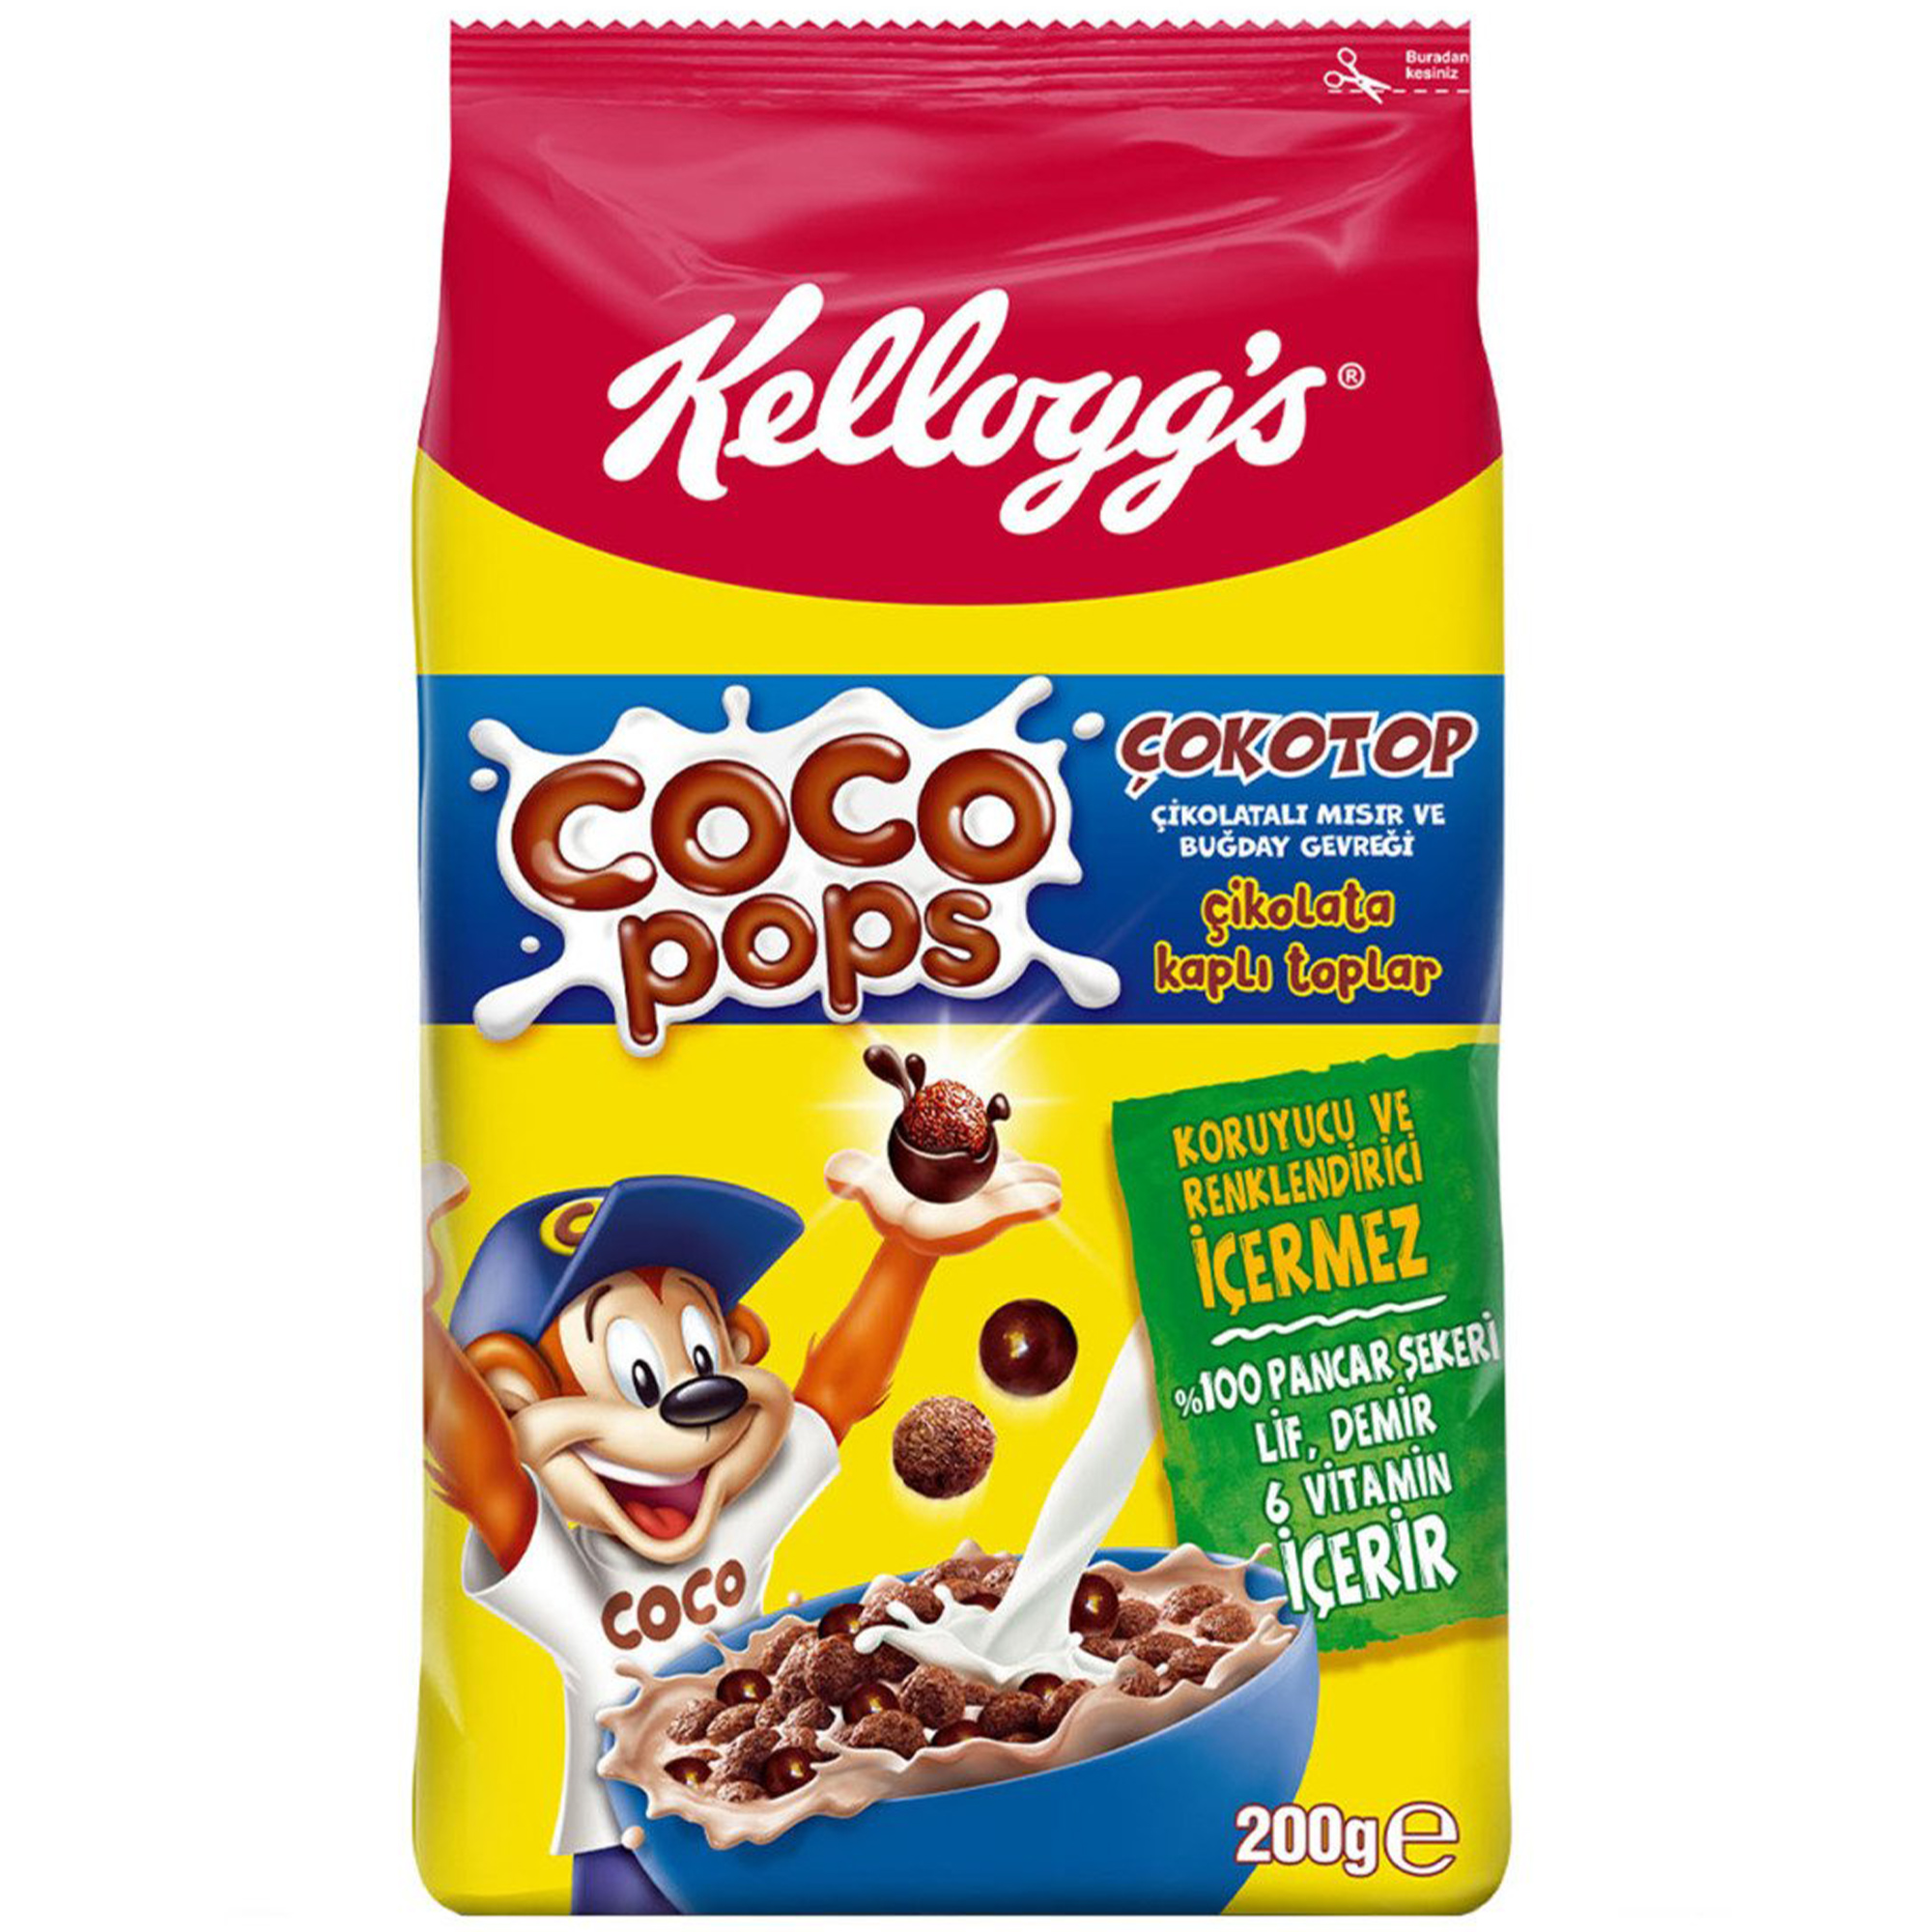 Готовый завтрак Kellogg's Coco Pops Cokotop 200 г